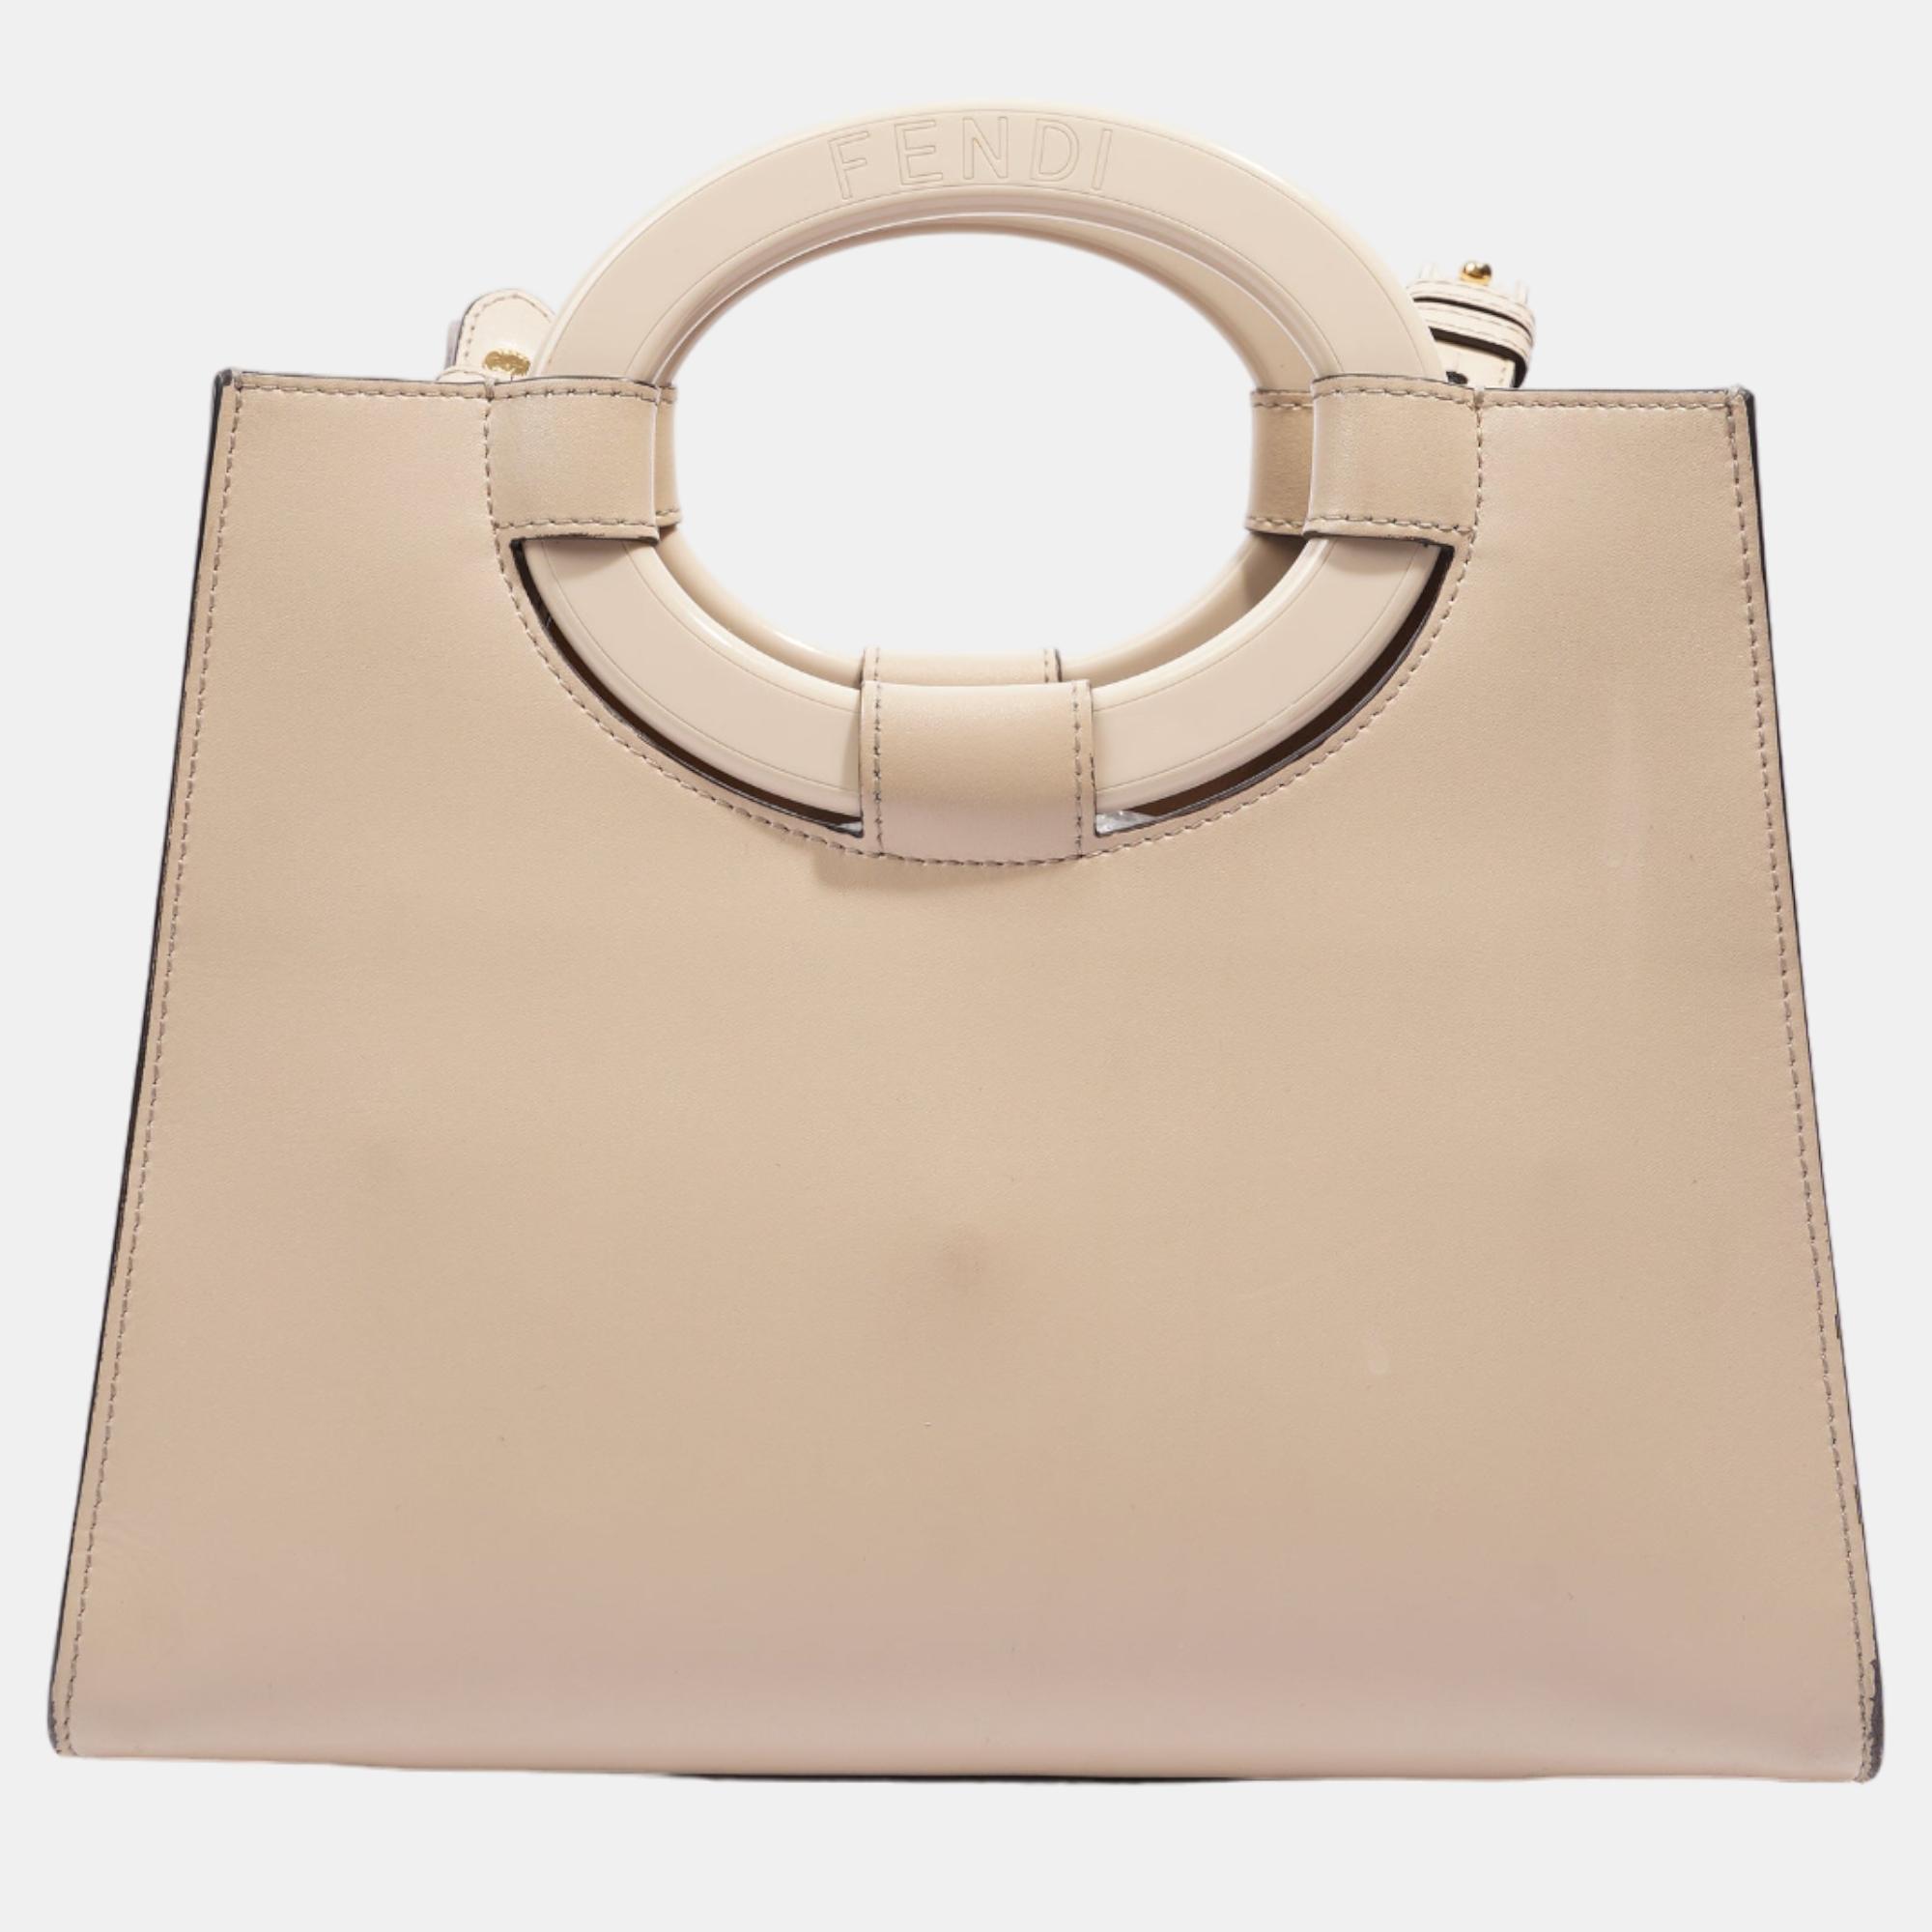 Fendi Runway Shopping Bag Cream Leather